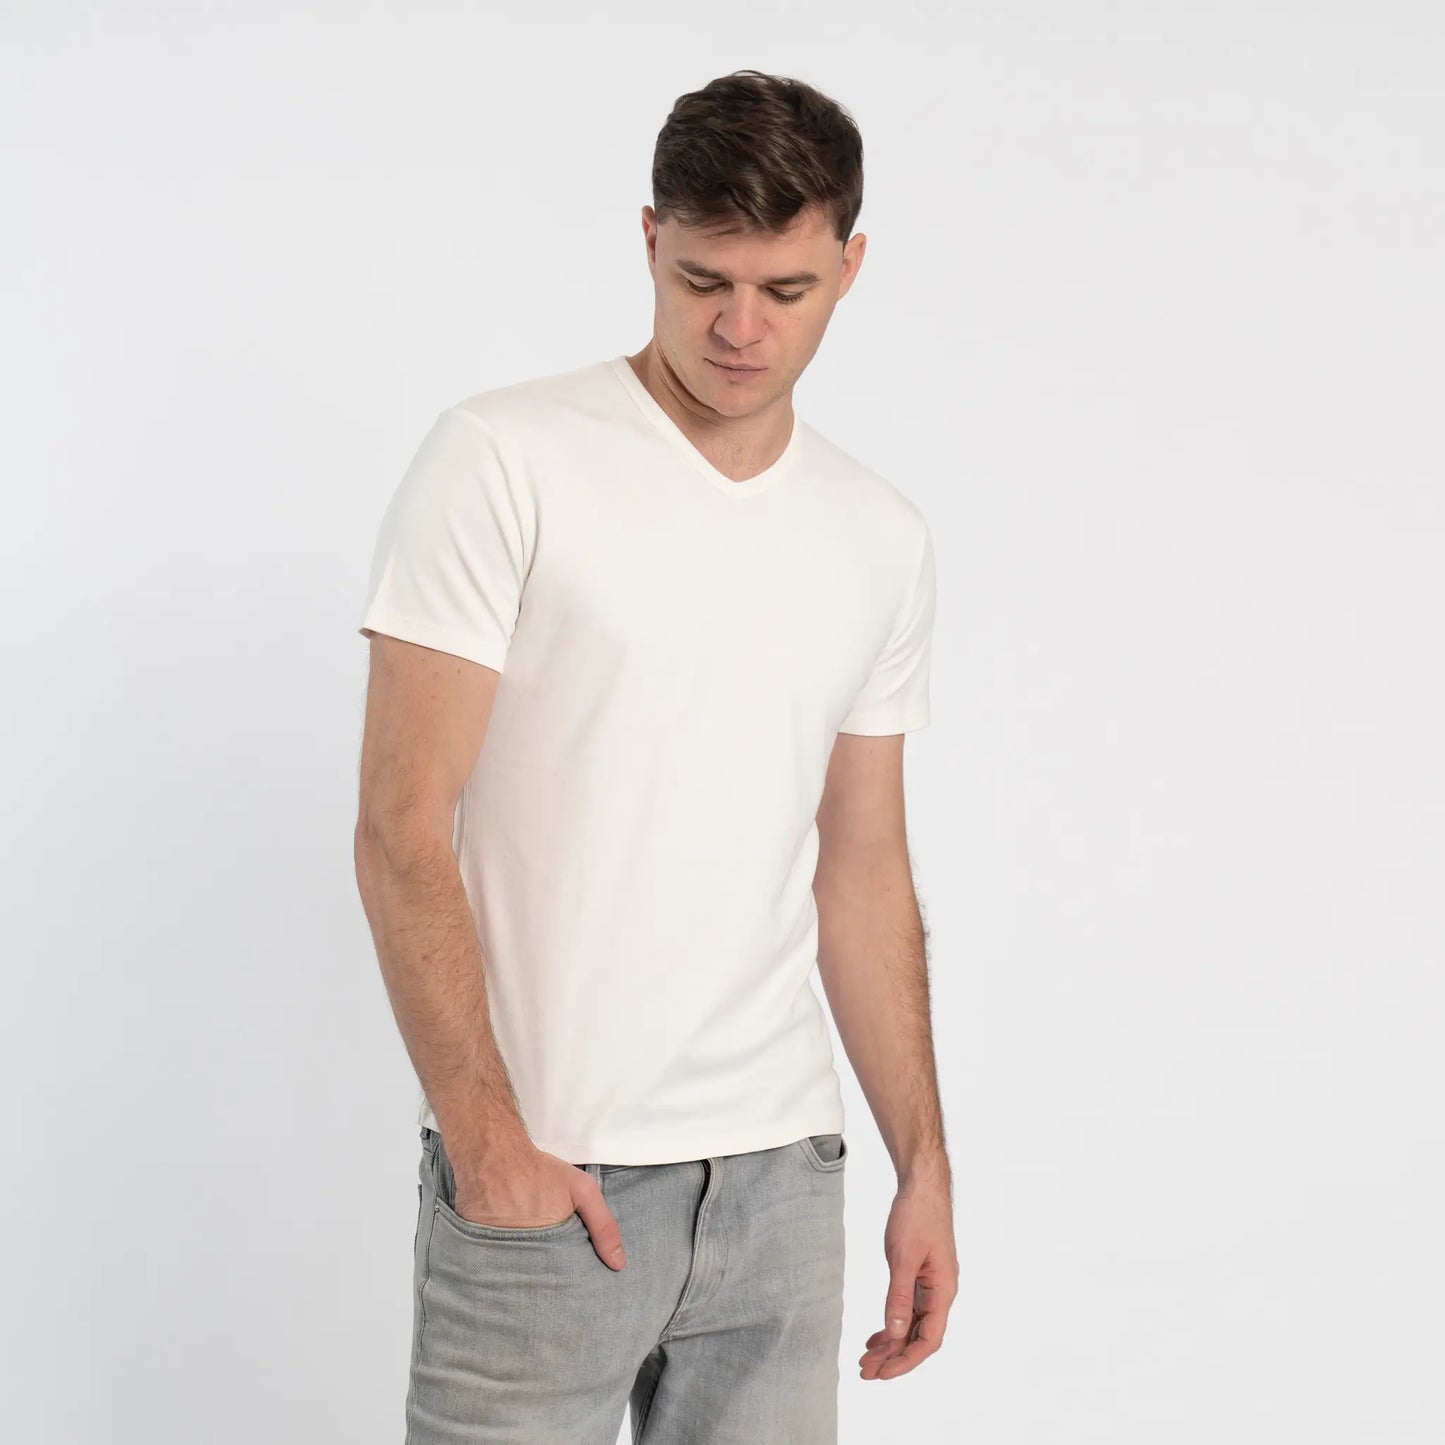 mens smooth pima cotton tshirt vneck color white